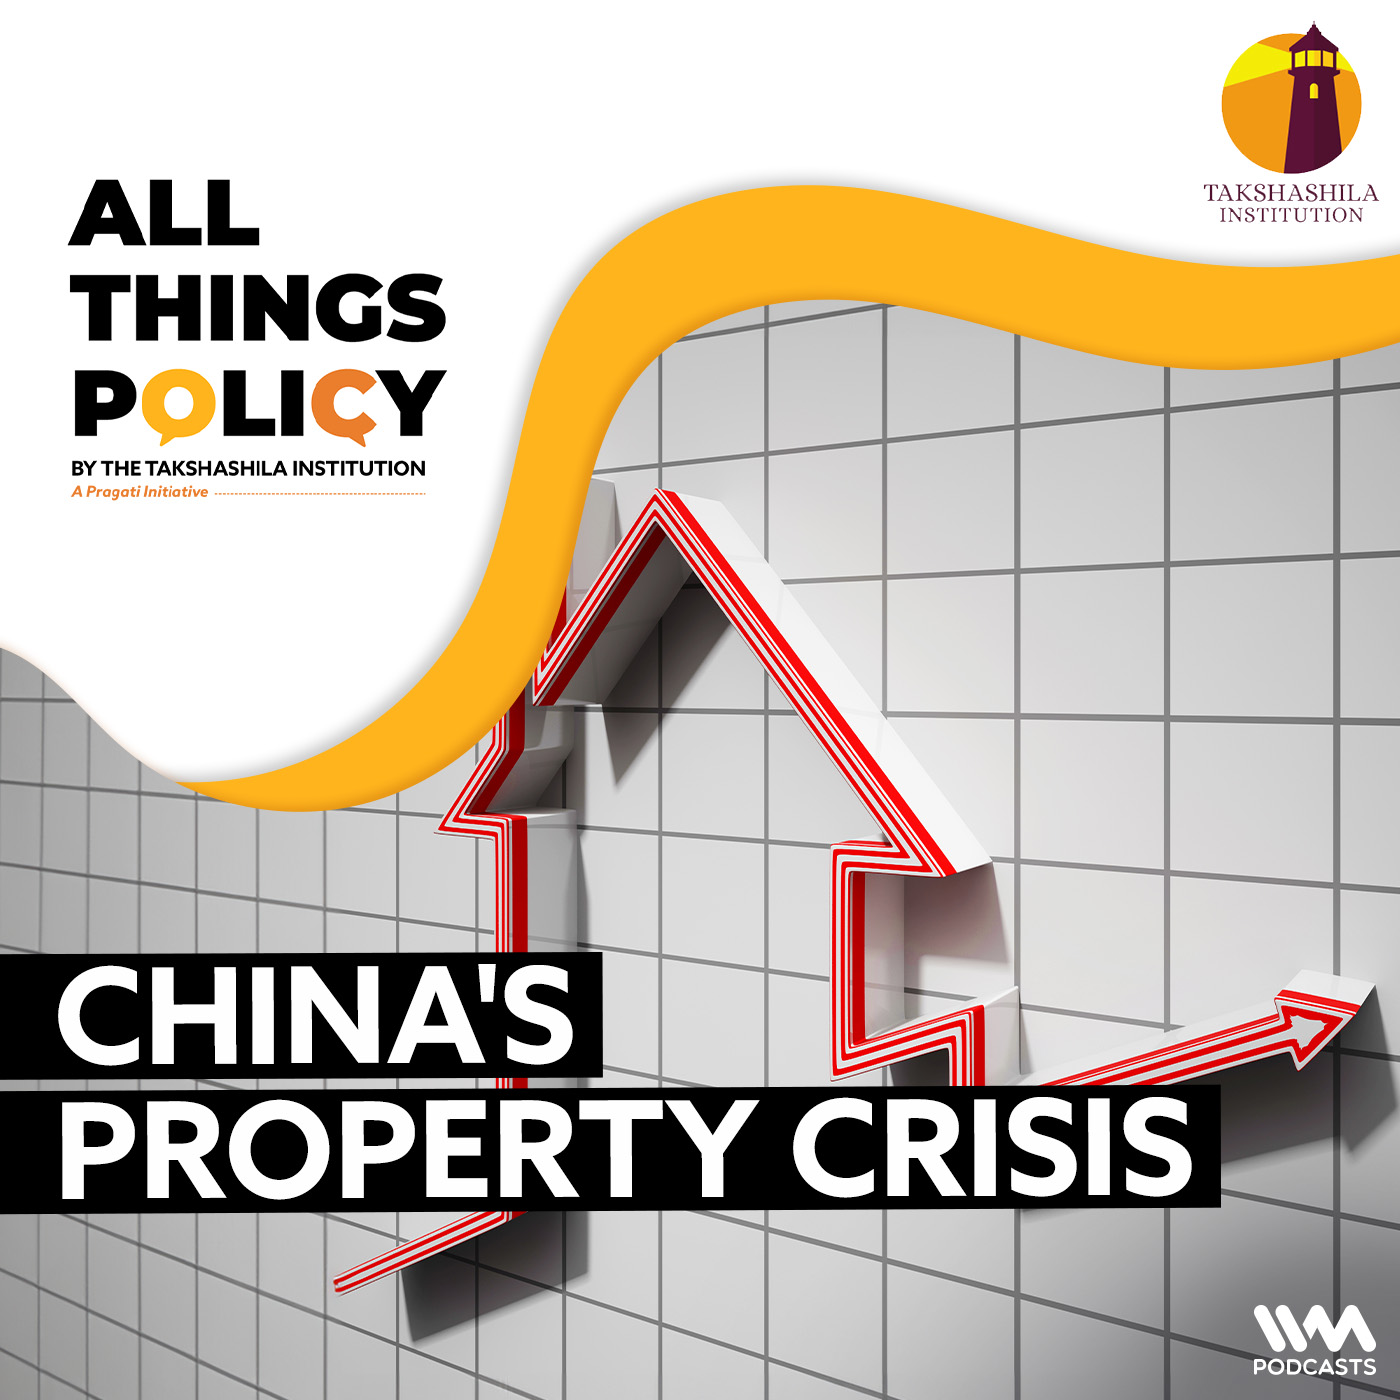 China's property crisis